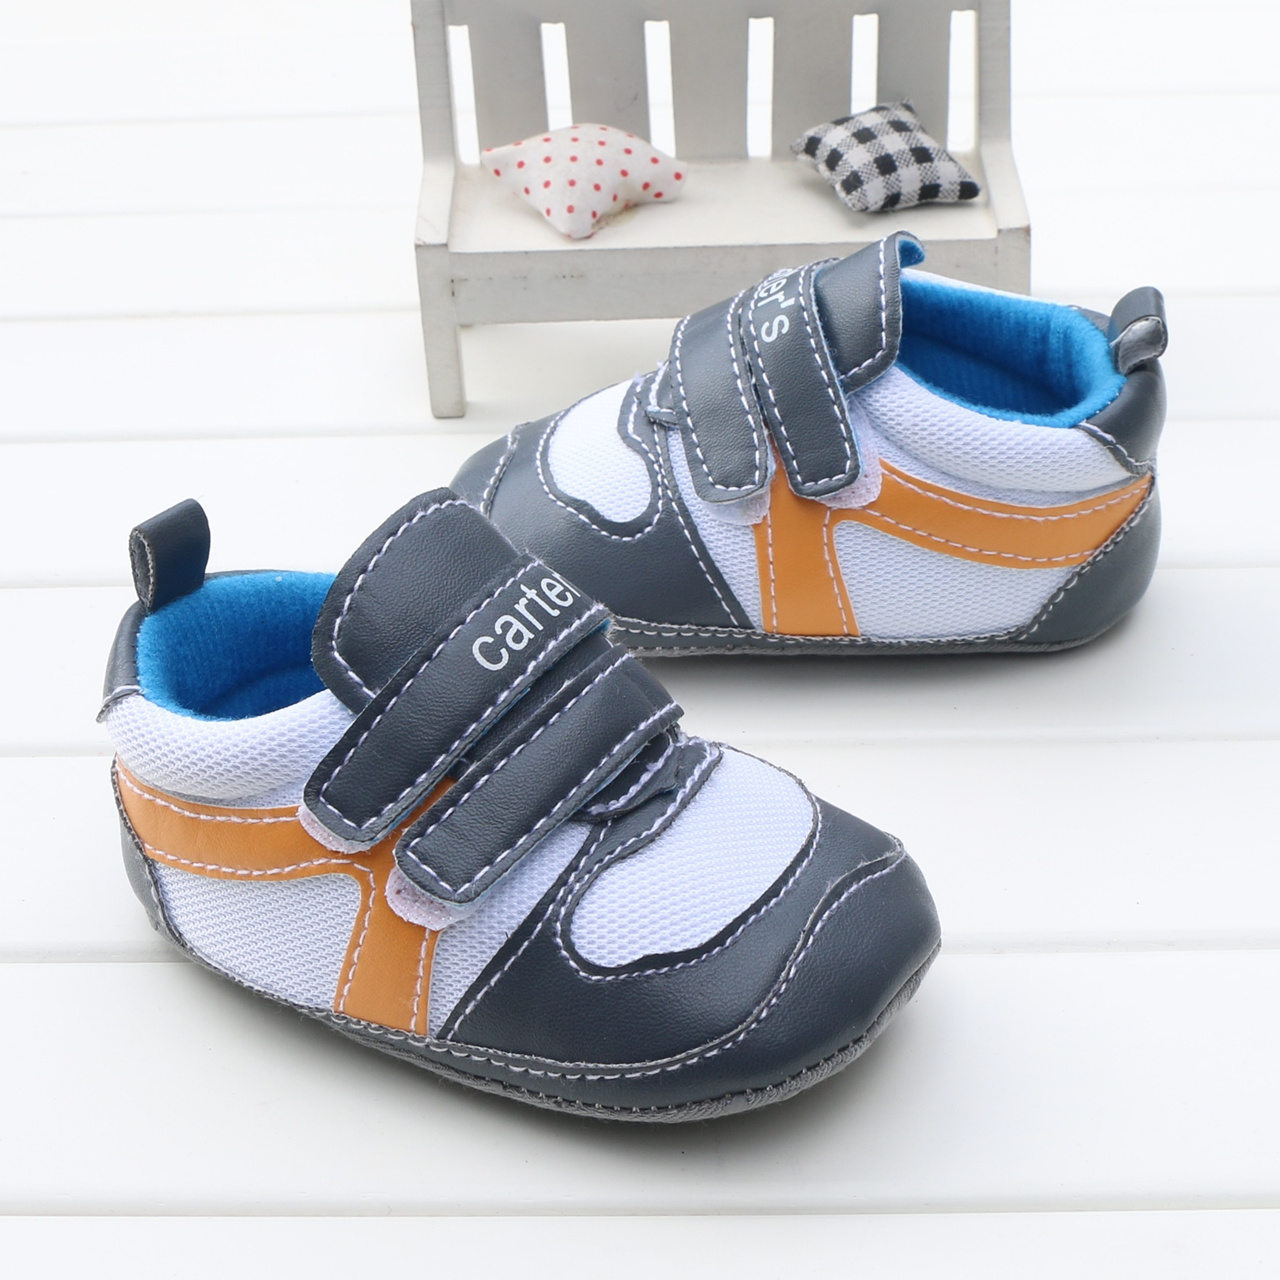 CARTERS Baby Soft Shoes Prewalker 